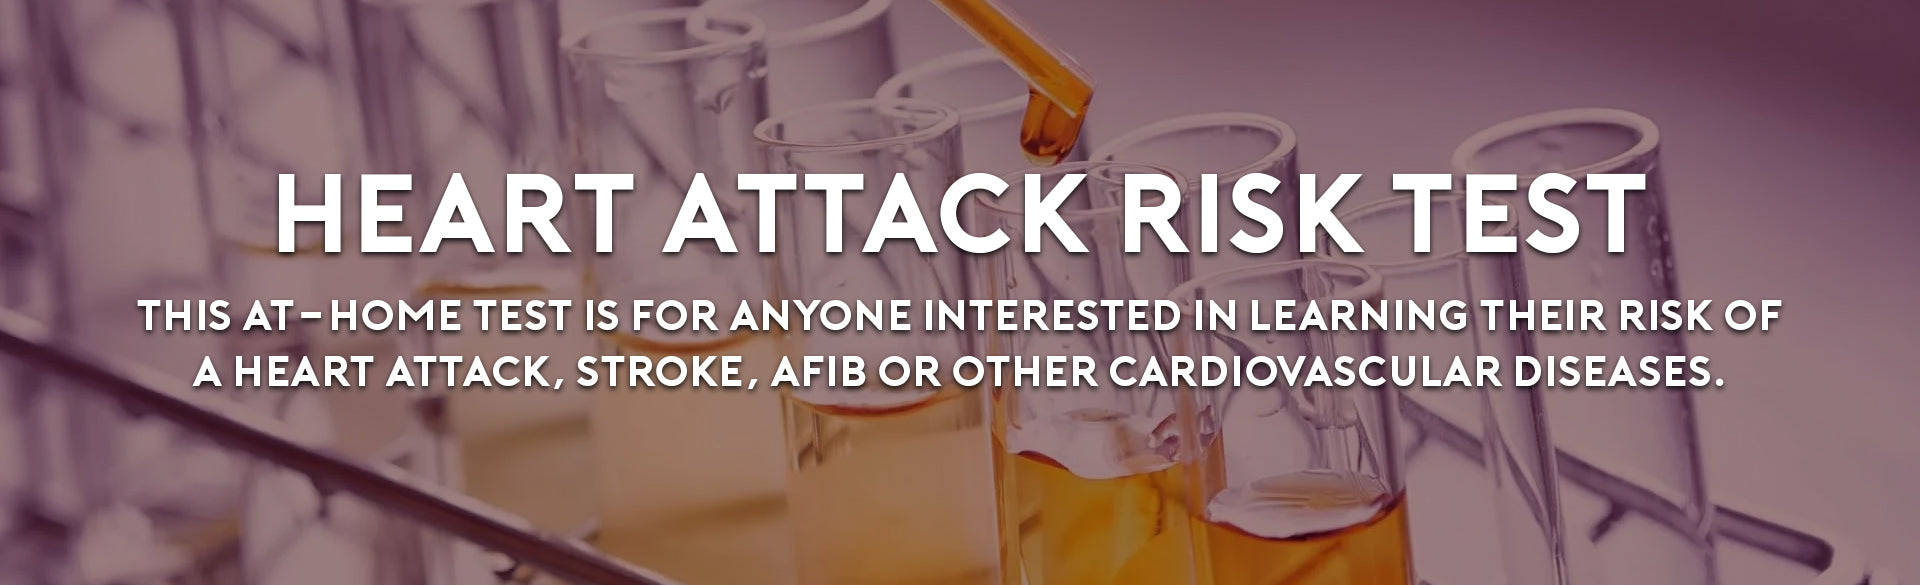 Heart Attack Risk Test